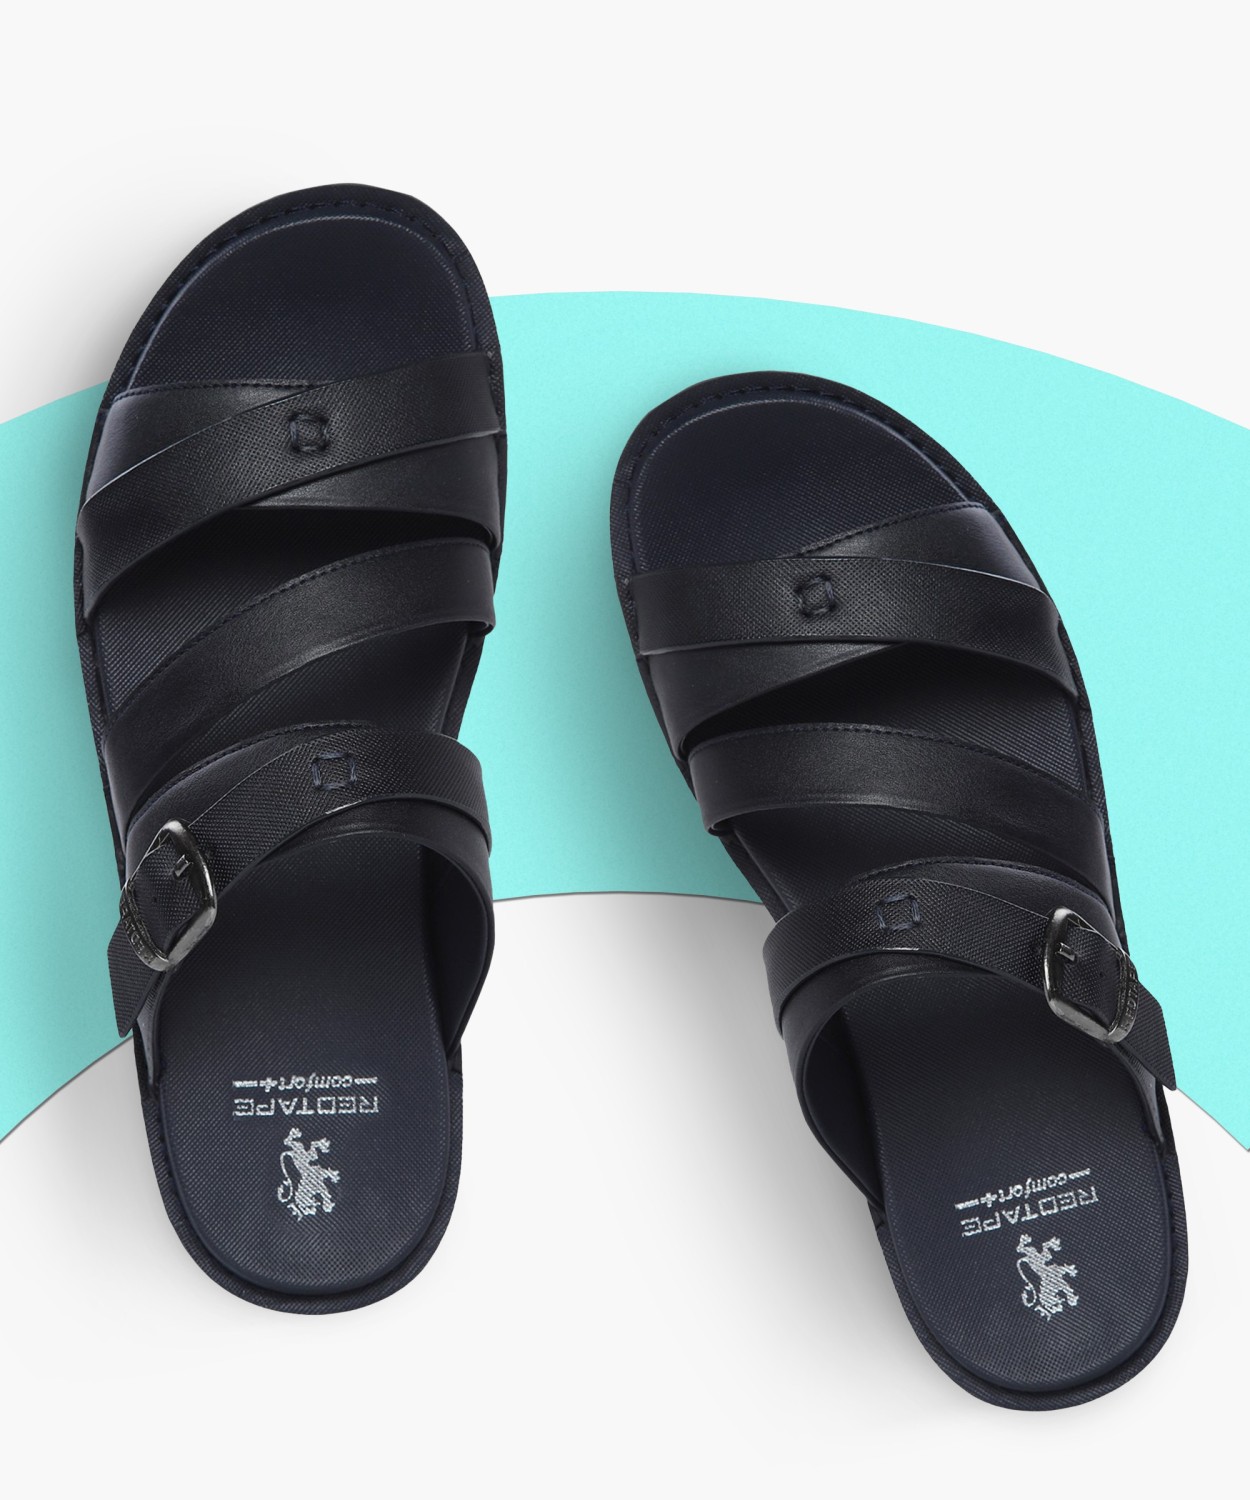 Men's Red Tape Holiday Beach Summer pool Mule Flip Flops Garden Sliders  sandals | eBay